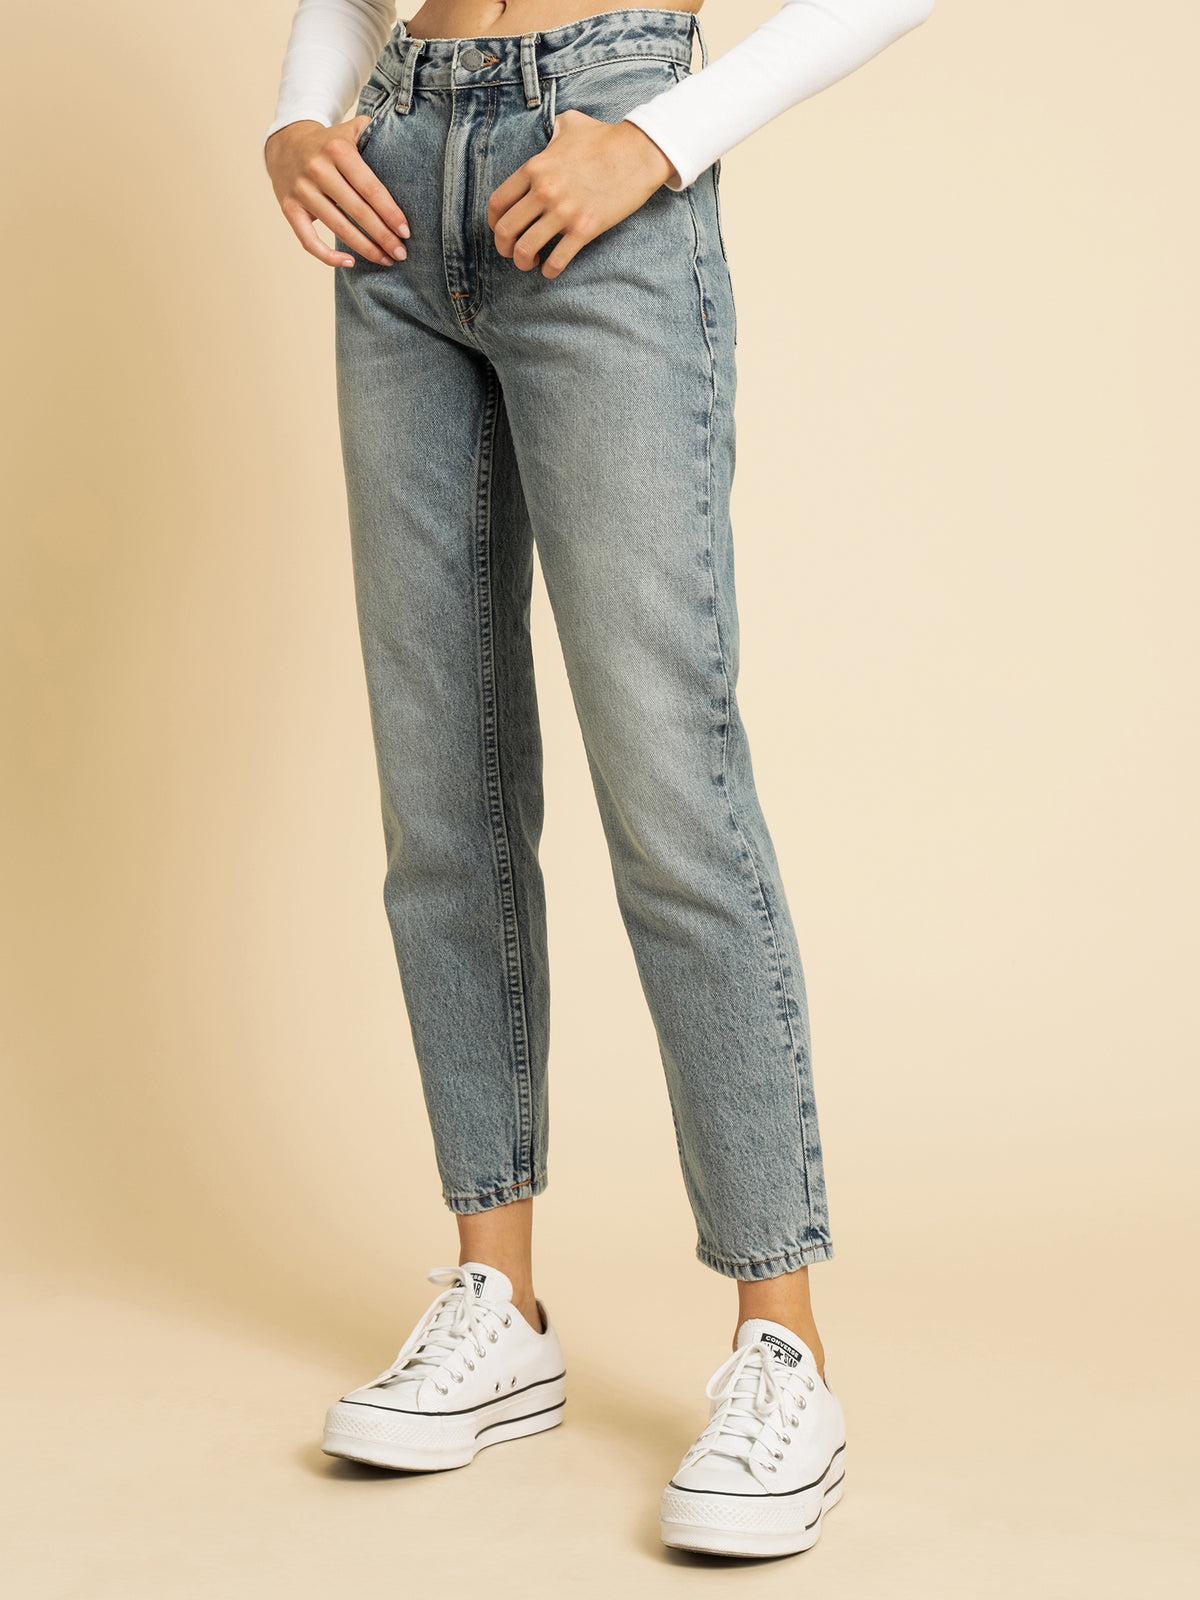 Breezy Britt Slim Jeans in Light Depo